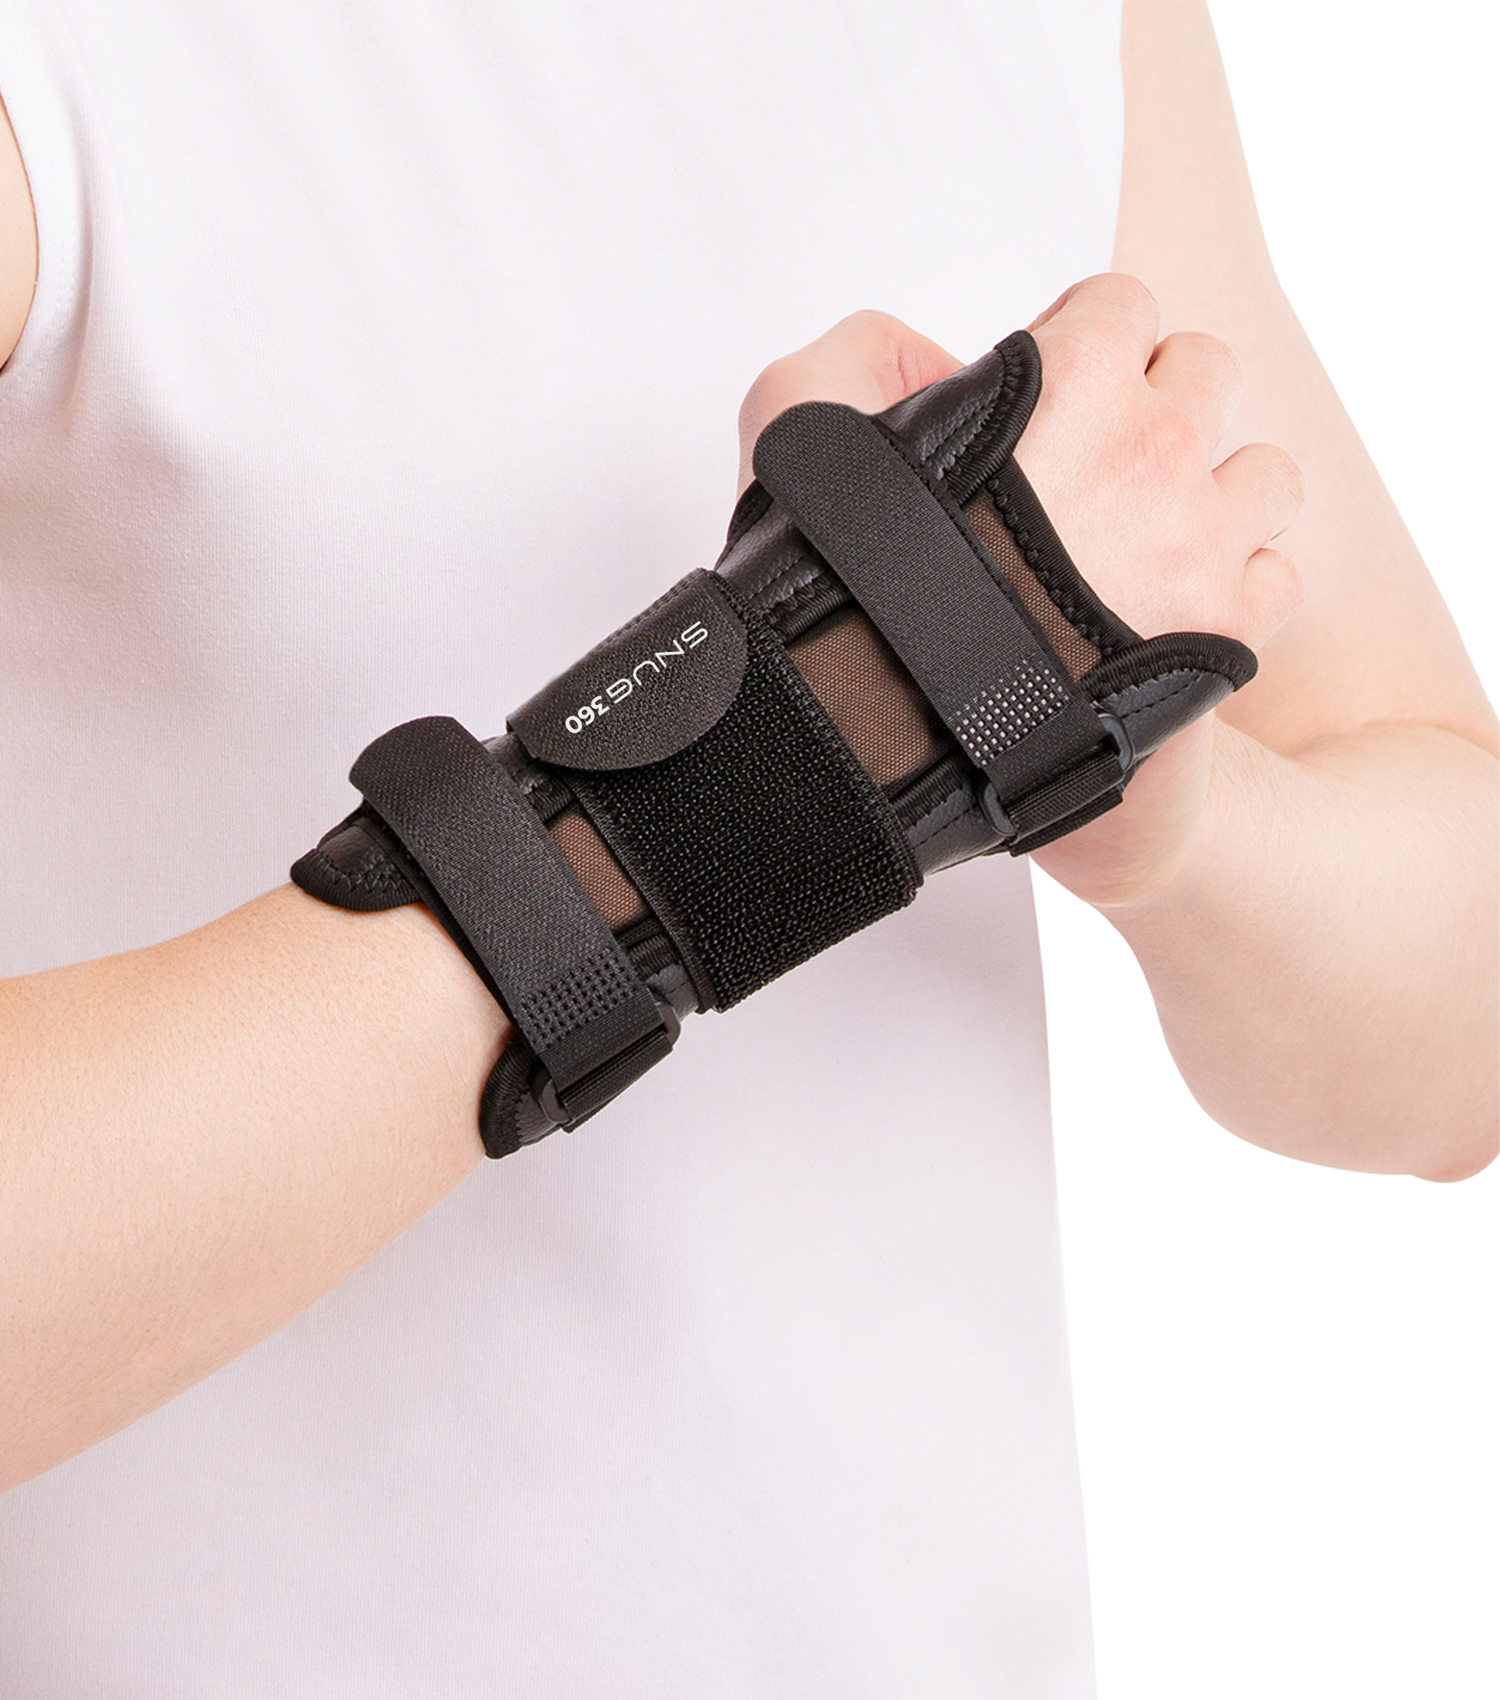 Universal Wrist Support Brace